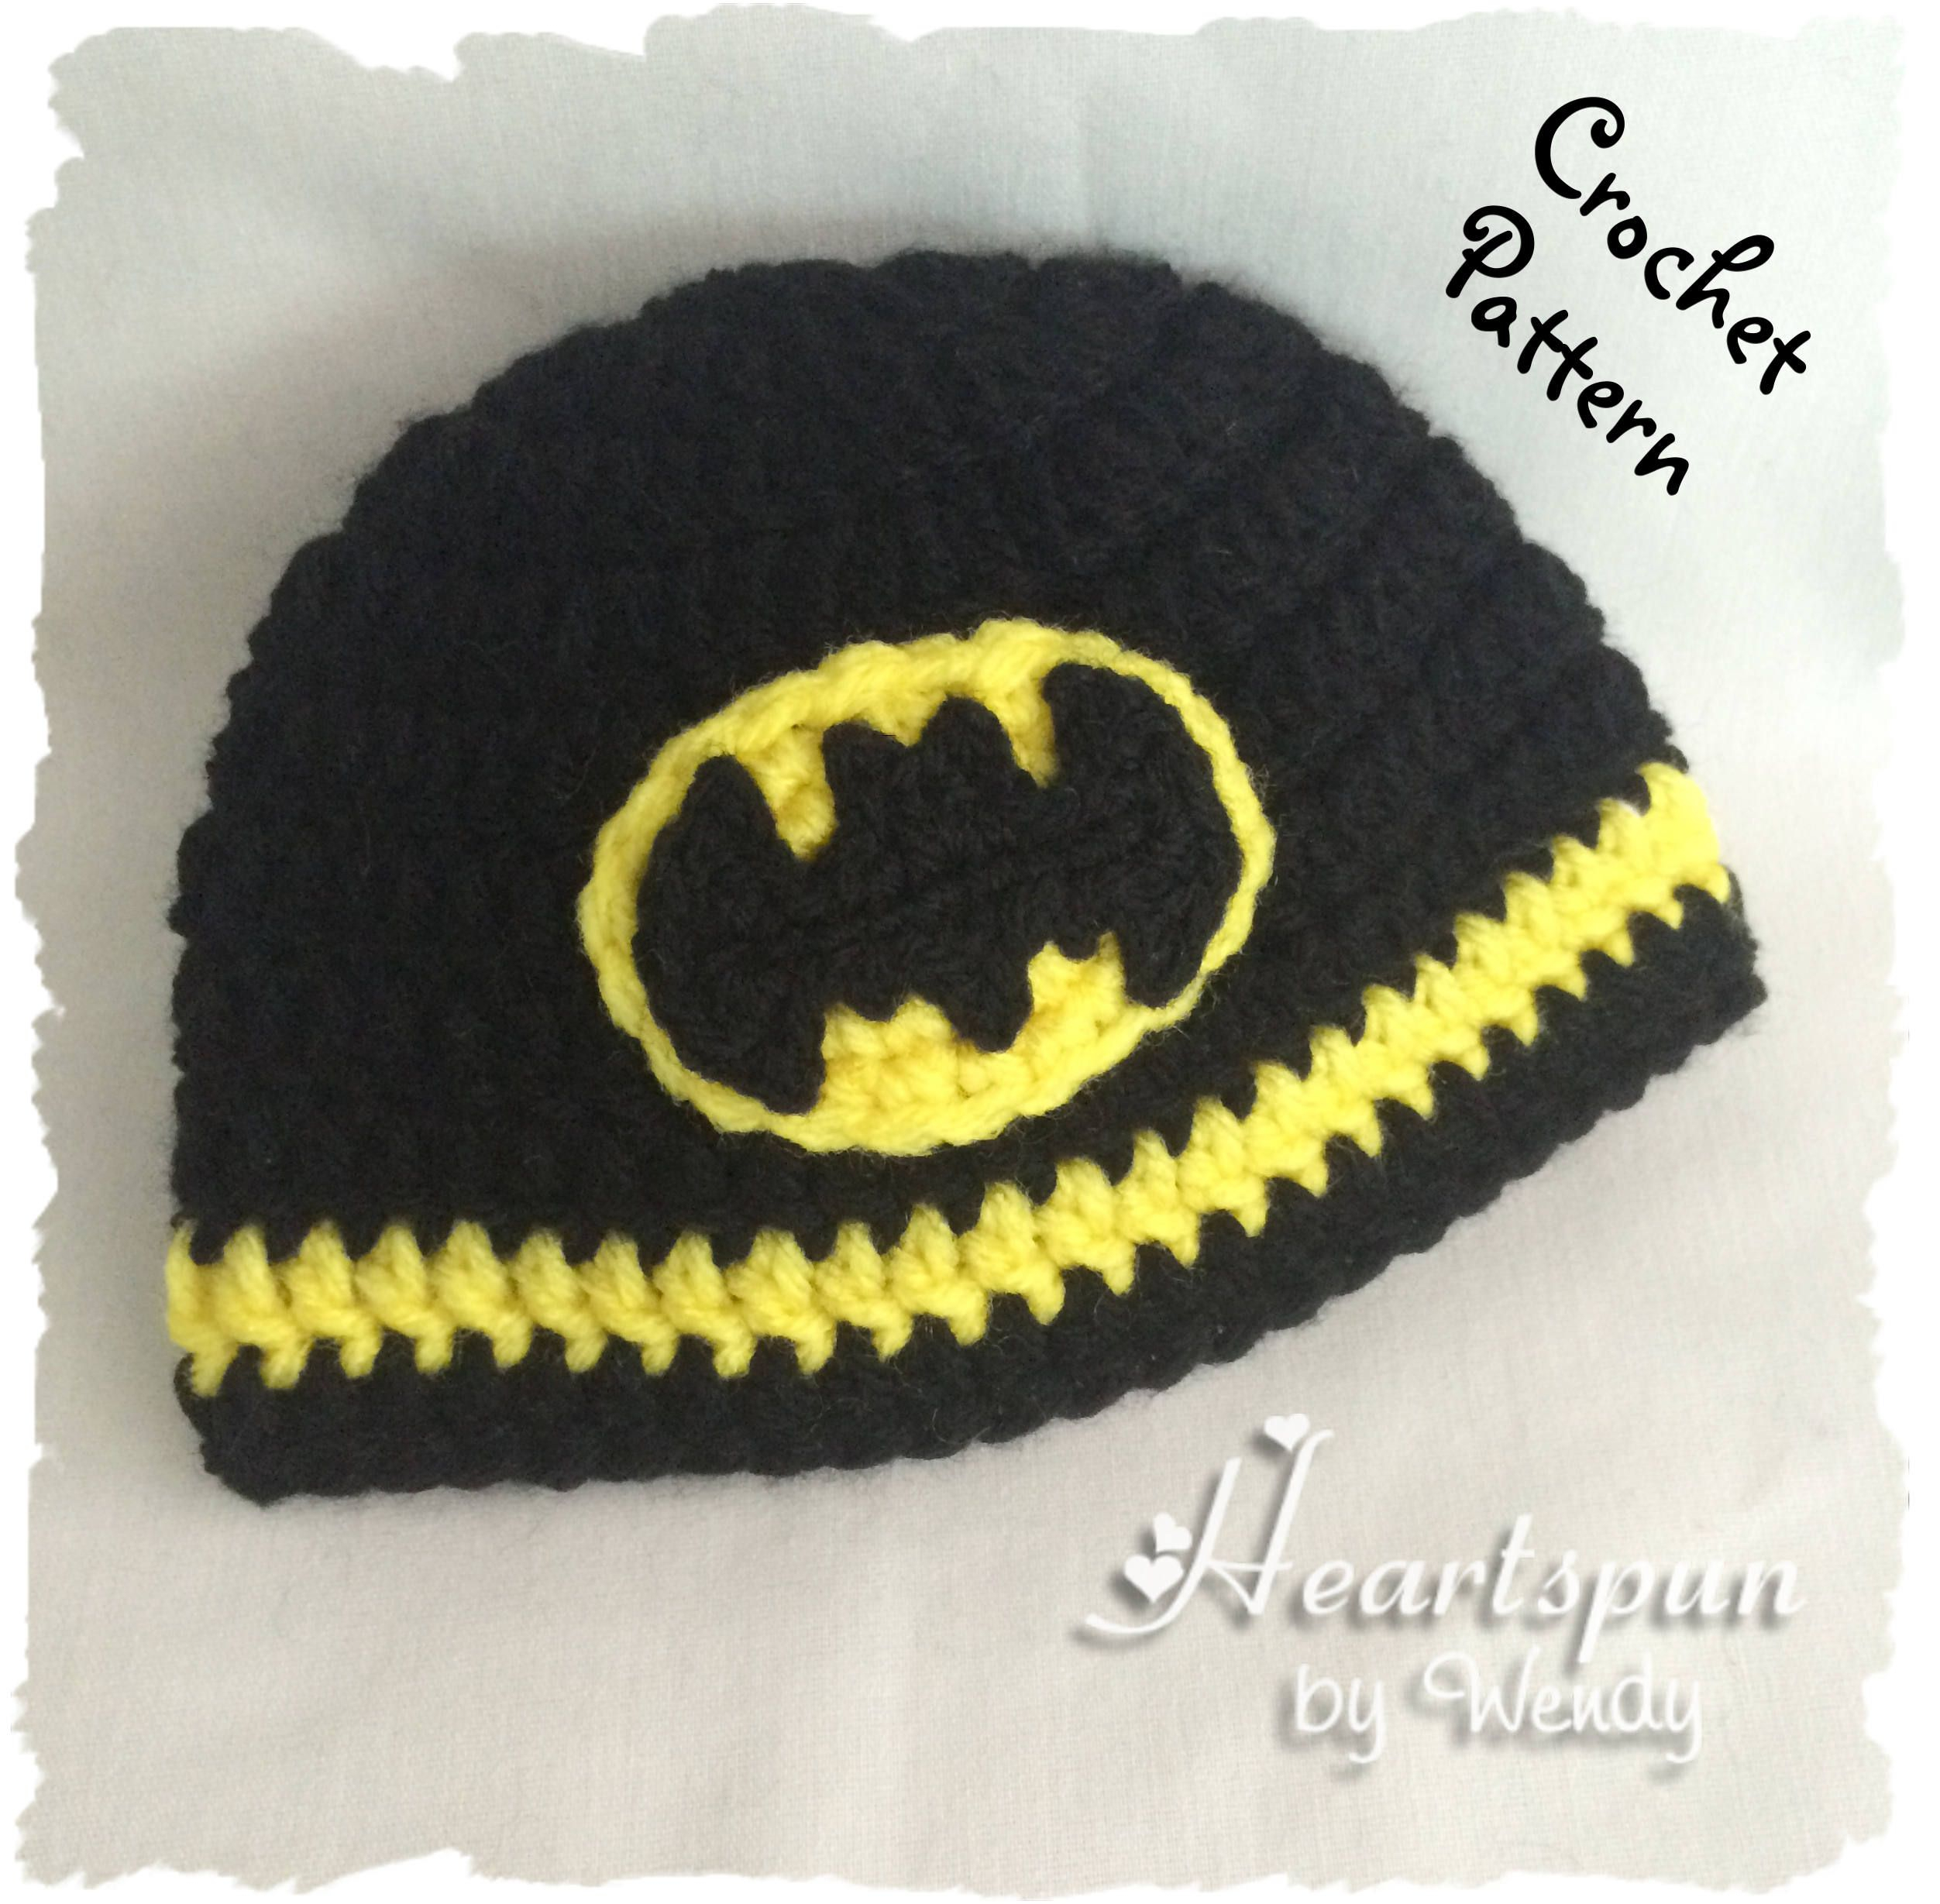 Crochet Batman Hat Pattern Crochet Pattern To Make A Batman Hat In 8 Sizes Ba To Adult And